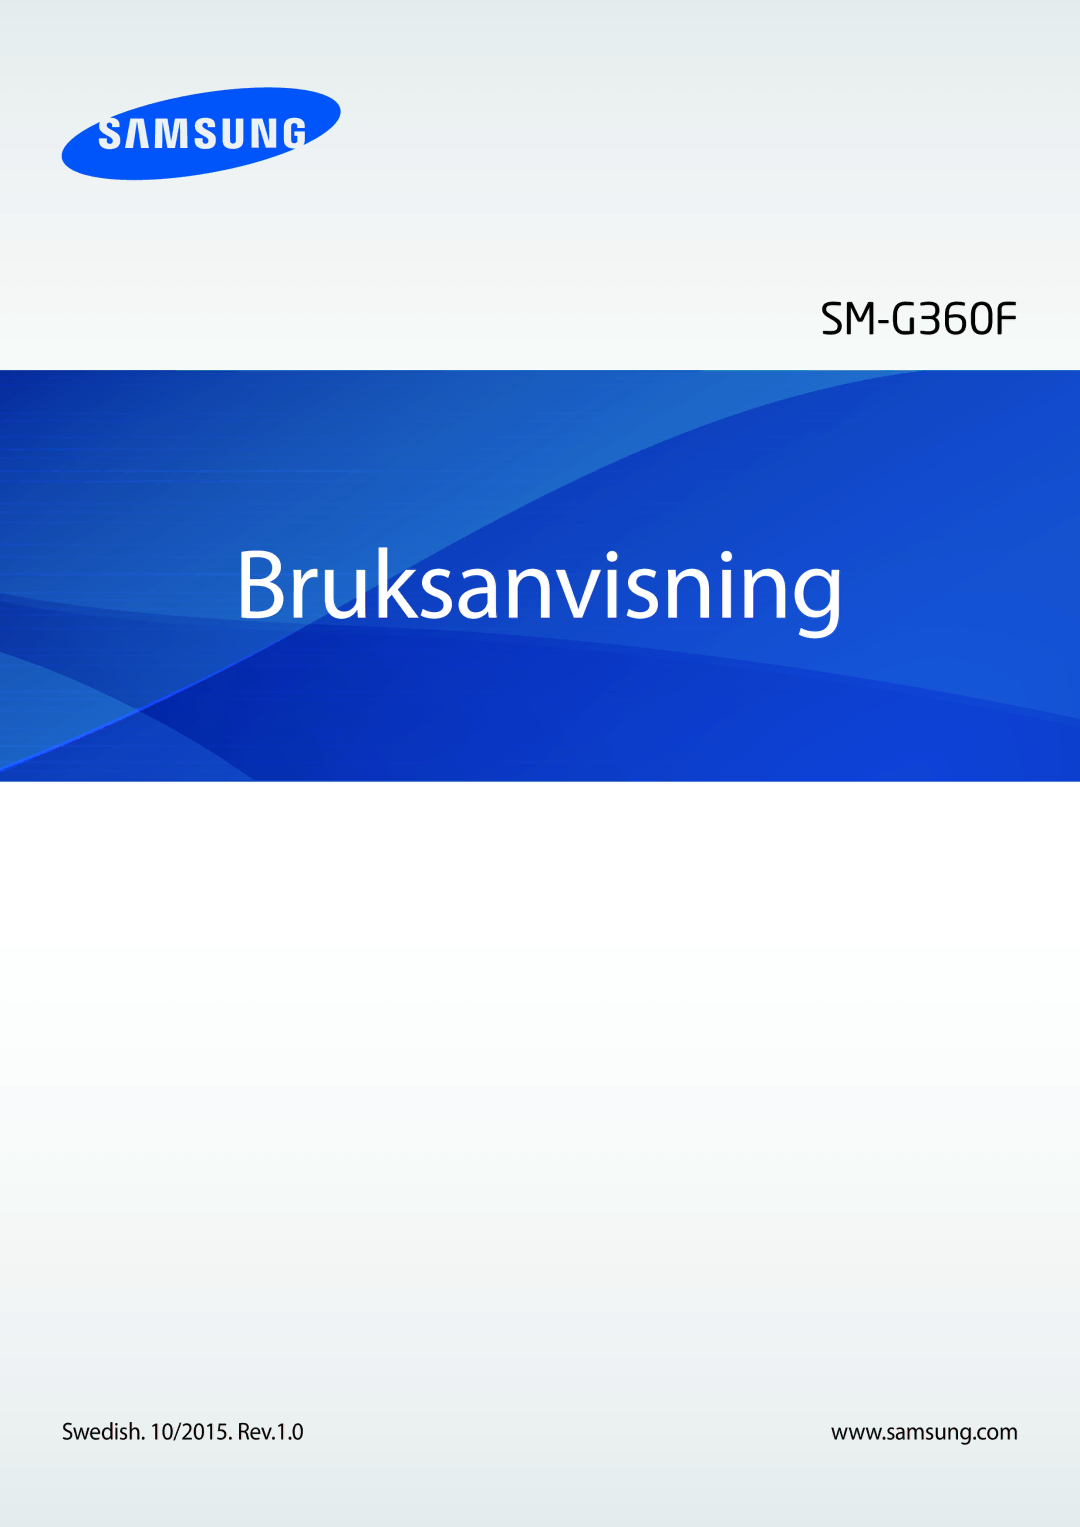 Samsung SM-G360FHAANEE, SM-G360FZWANEE, SM-G360FZSANEE manual Brukerhåndbok 